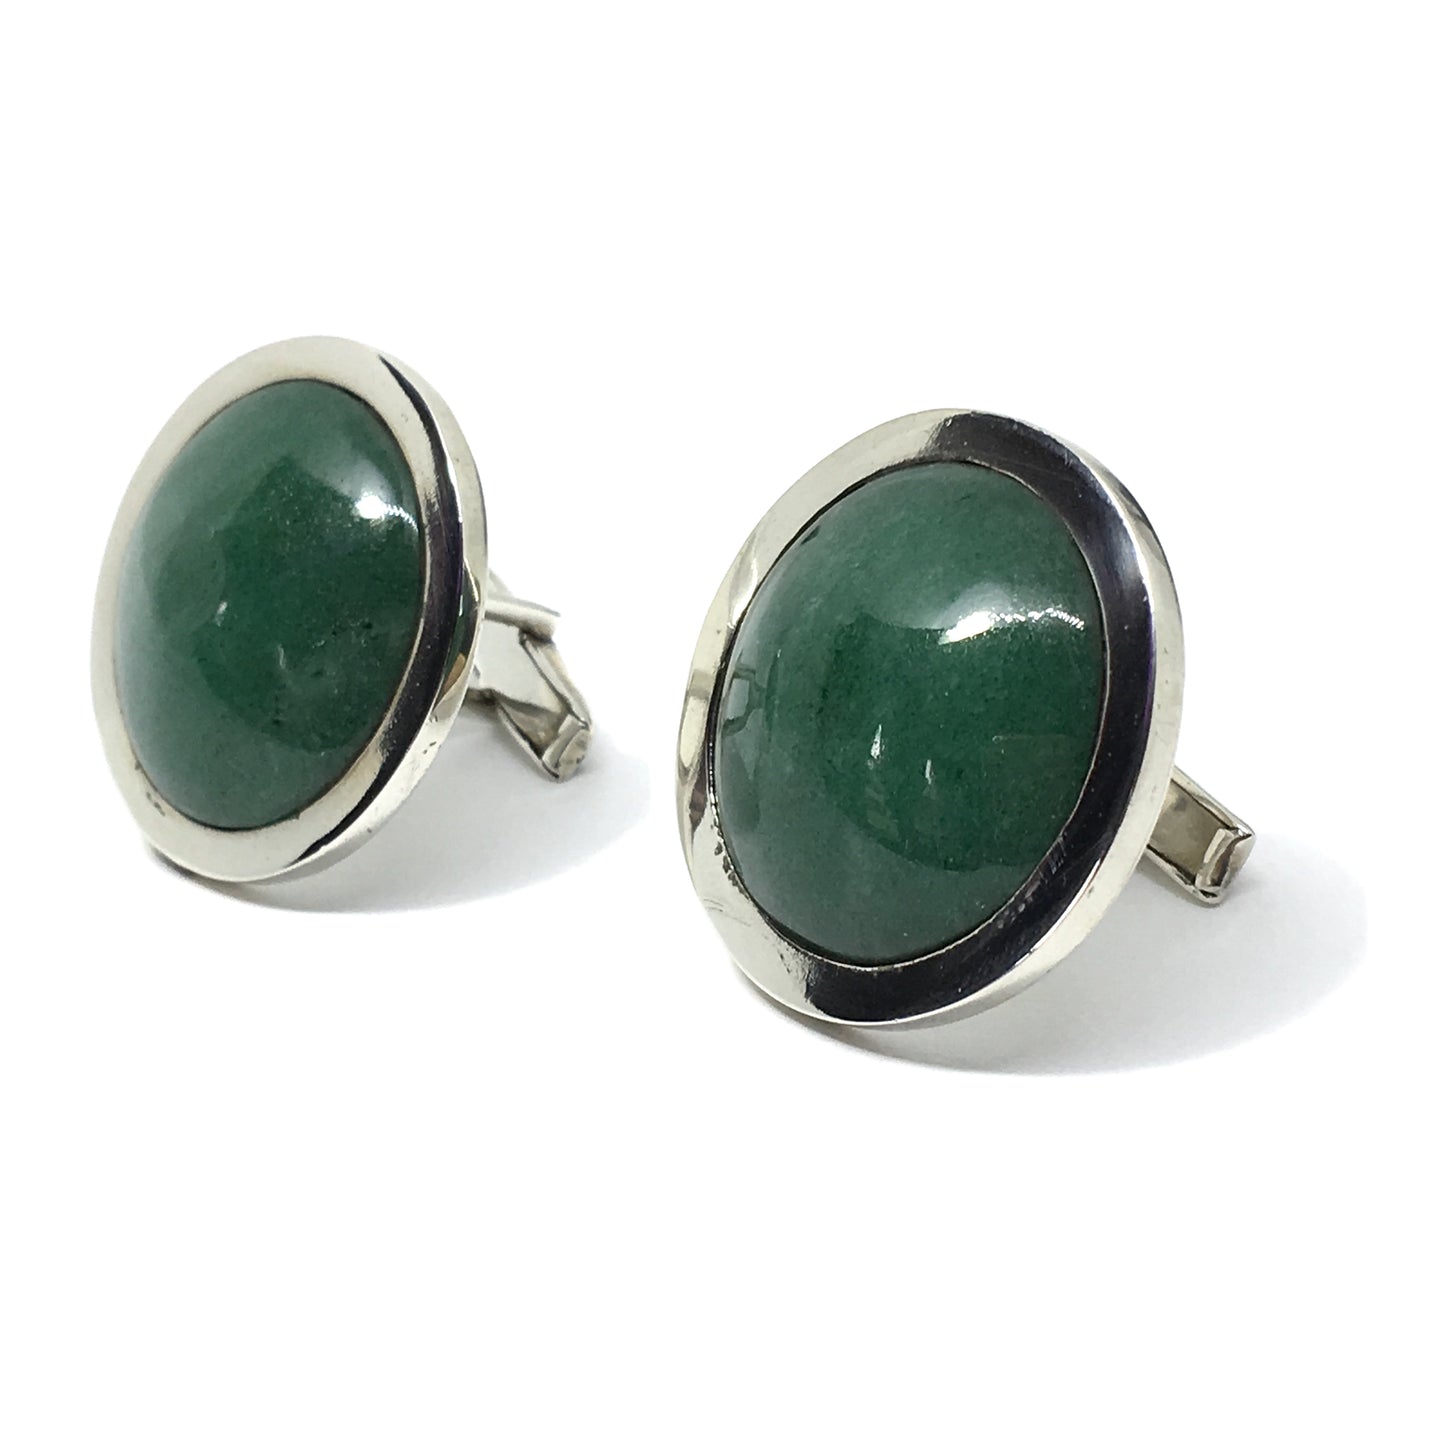 Cufflinks - Sterling Silver 1970s Round Button Style Big Green Stone Cufflinks - Vintage Jewelry